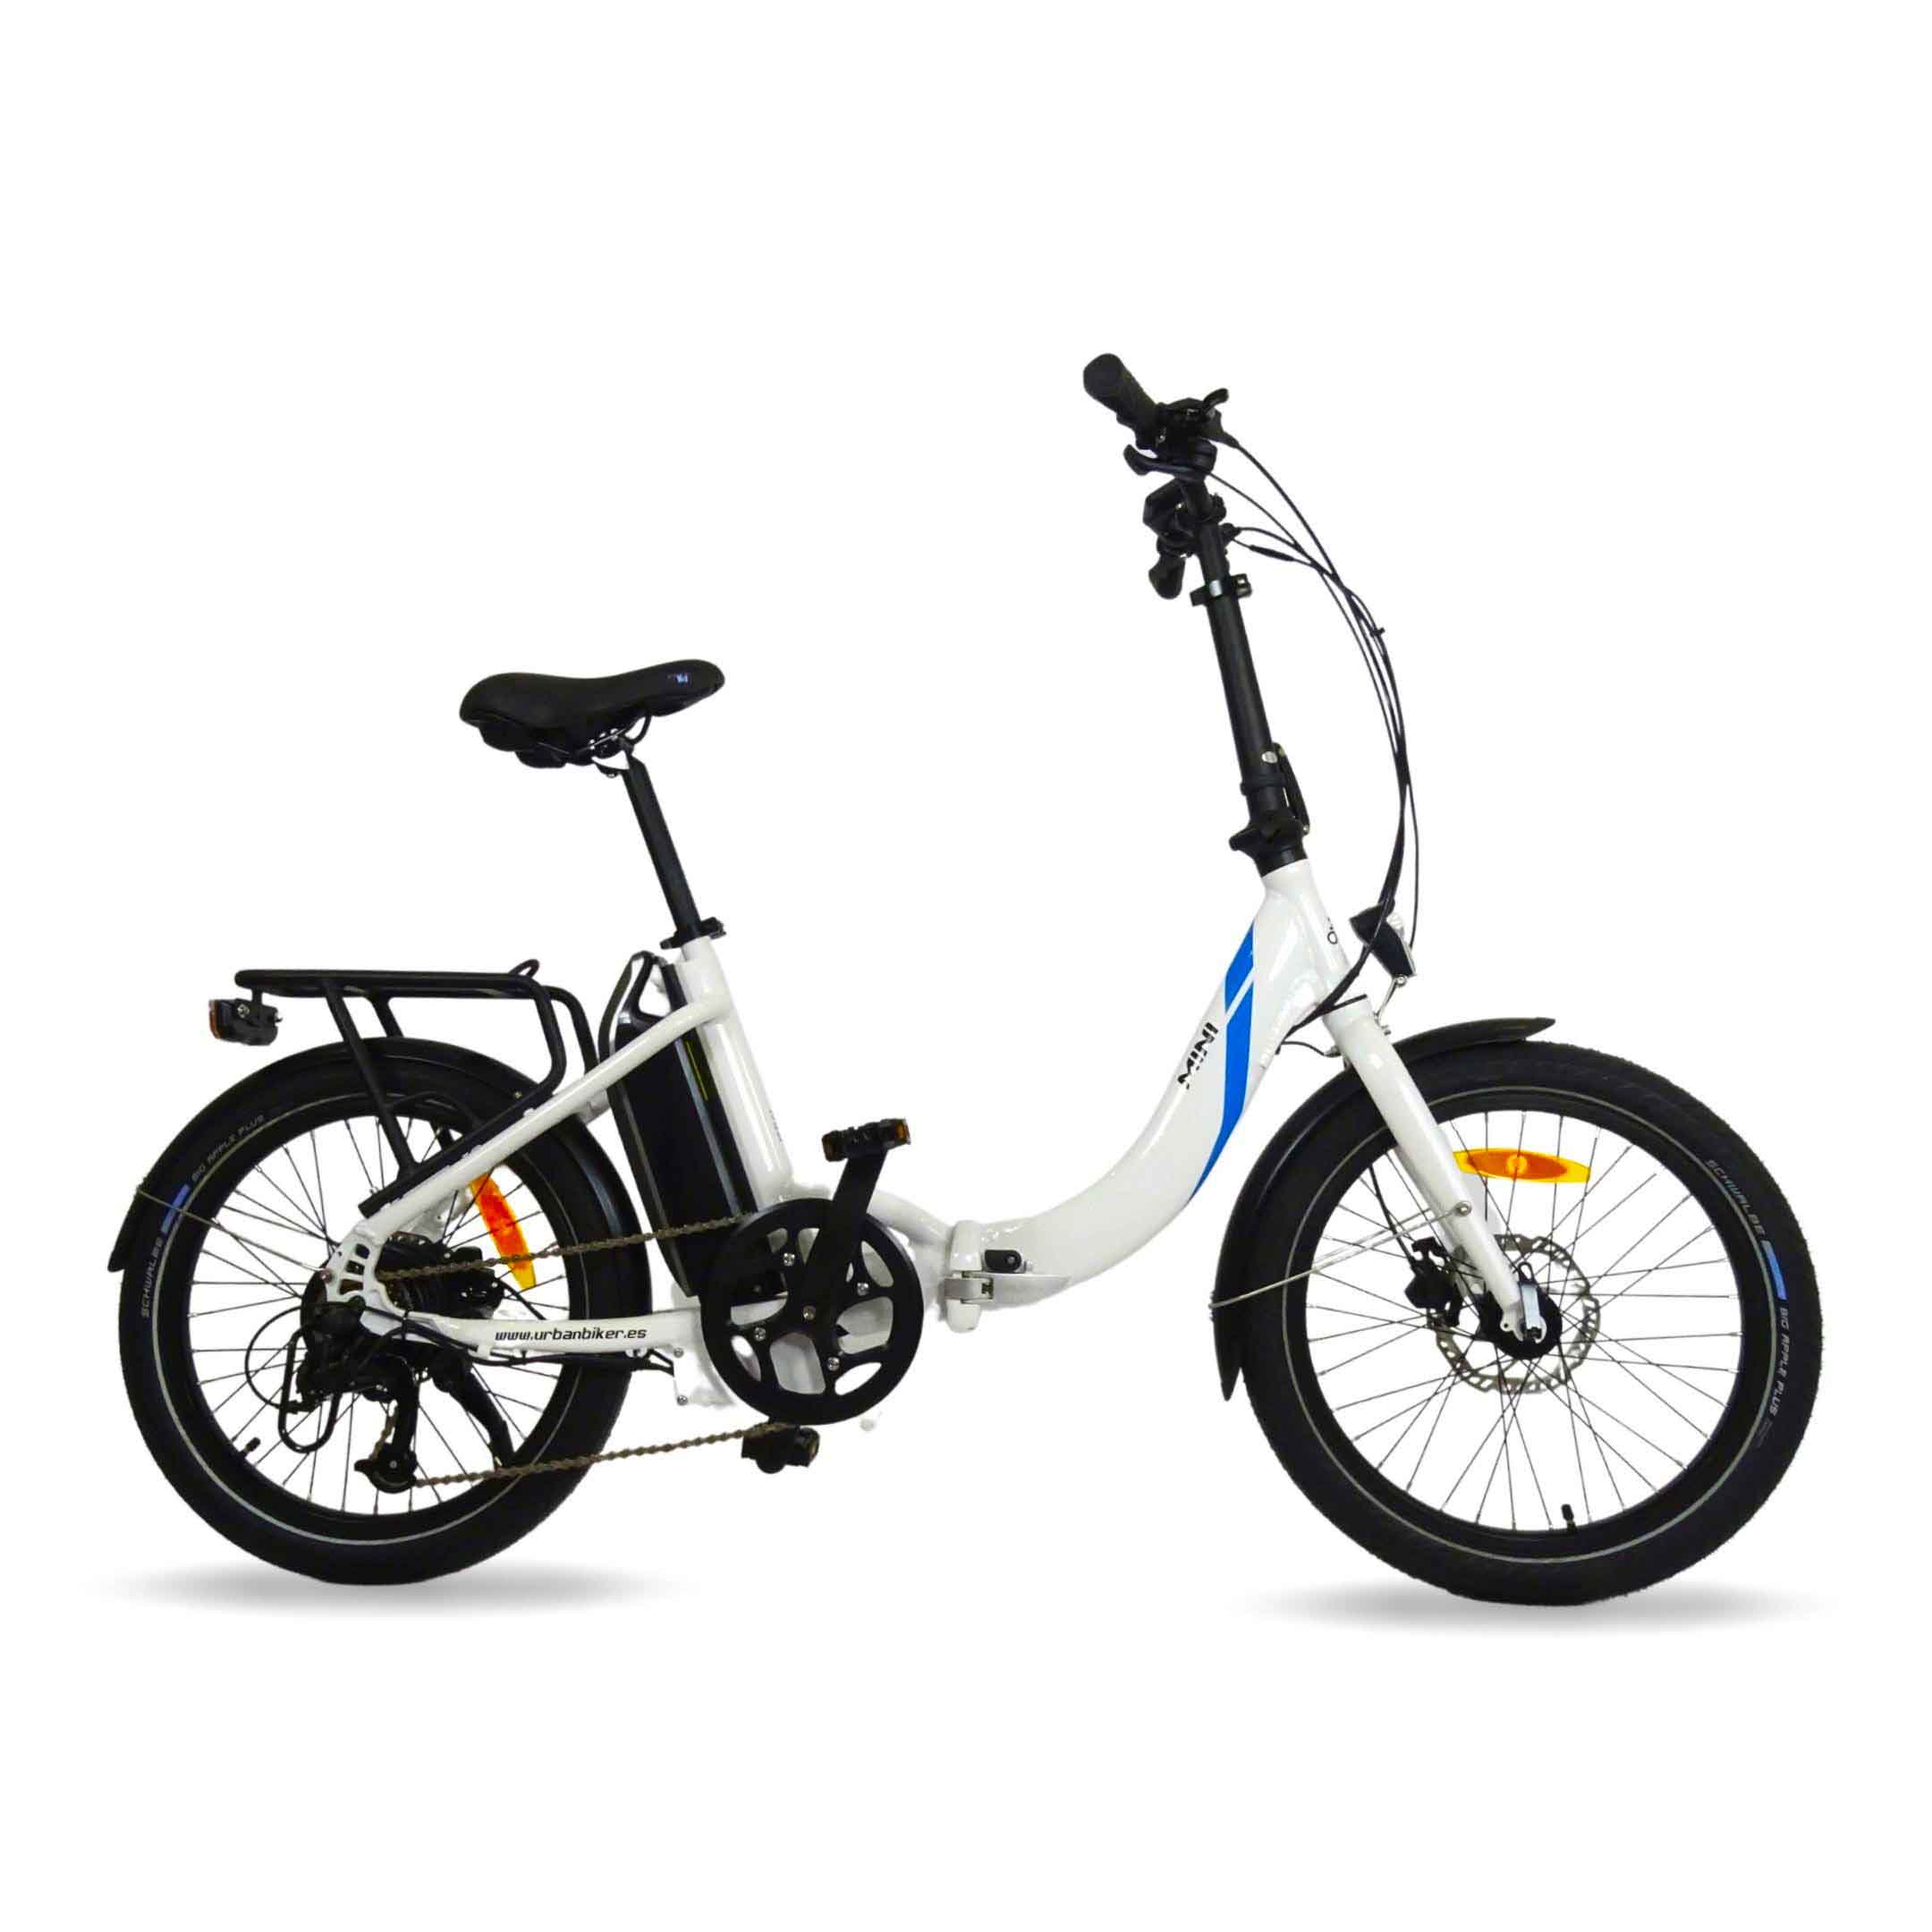 Urbanbiker Mini | Vouwfiets Mini | Elektrische Stadsfiets